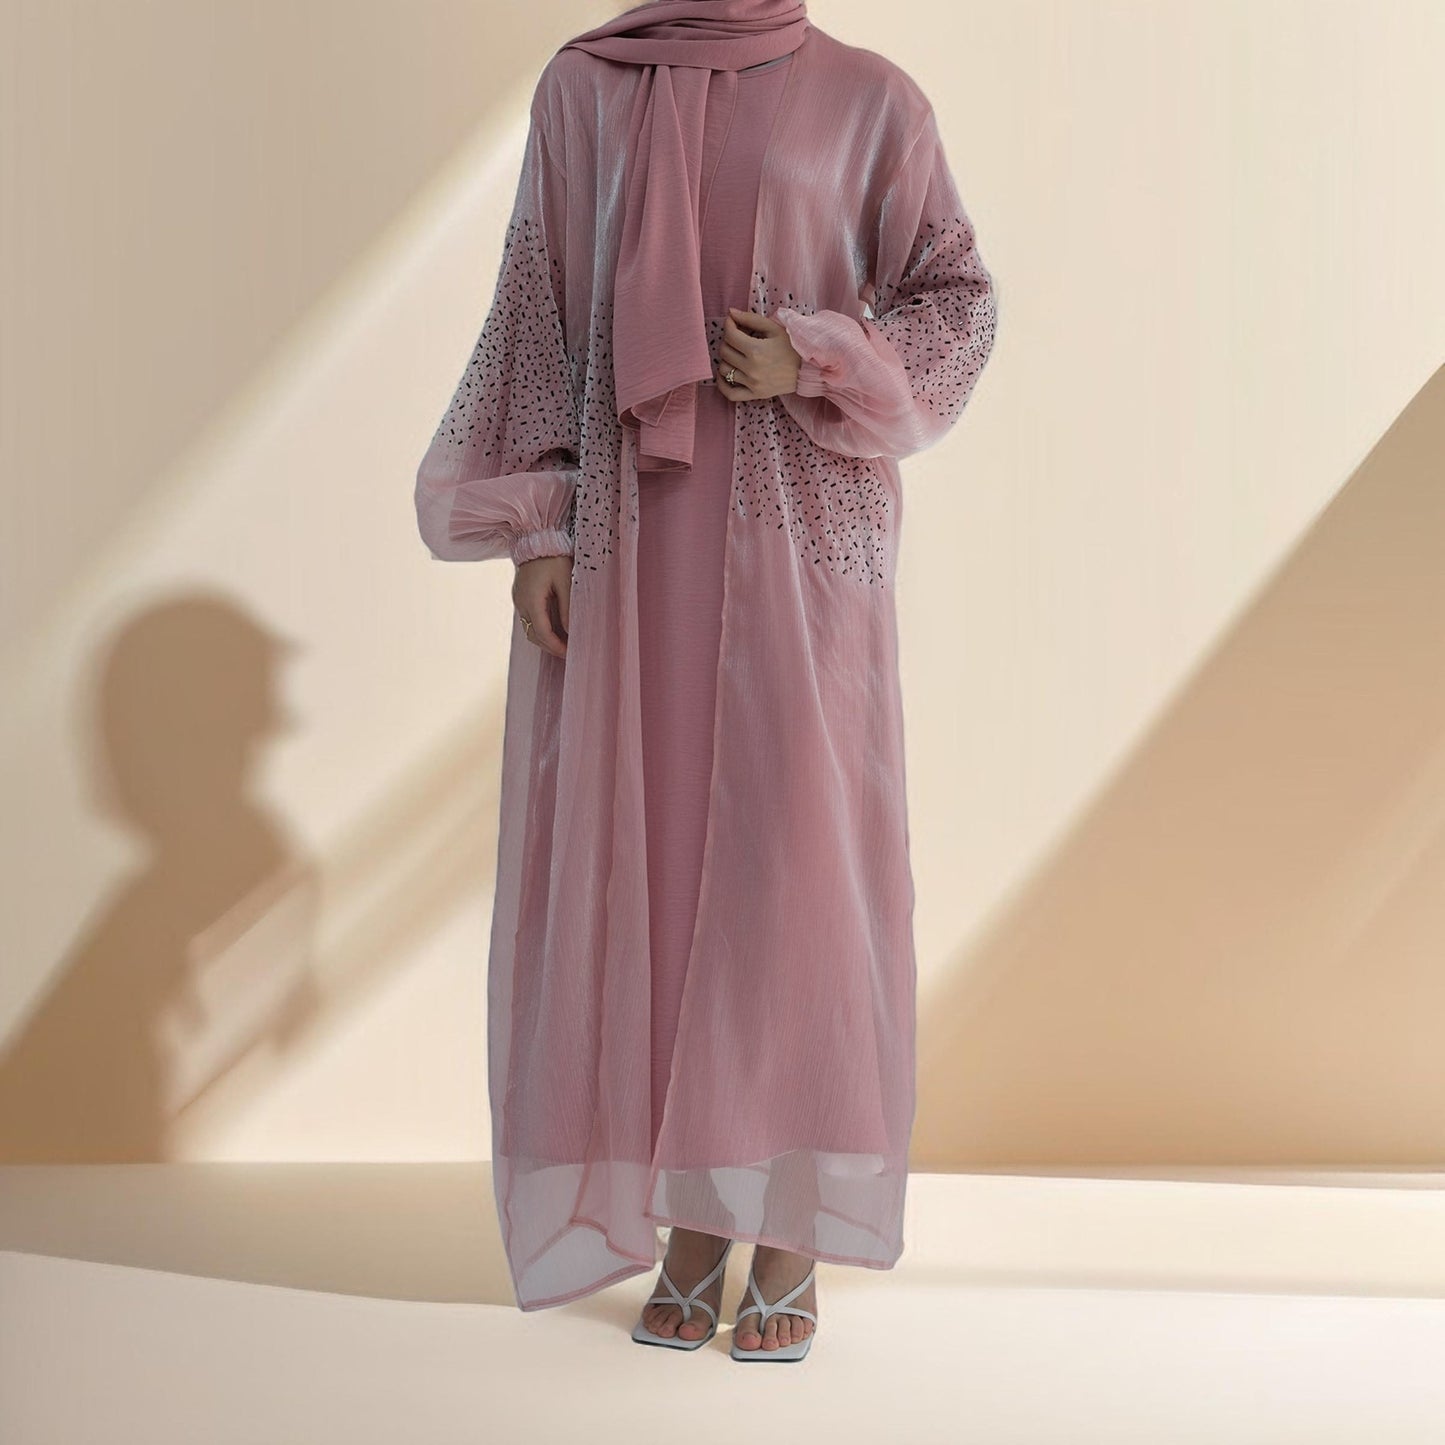 Stunning 2-Piece Abaya Set with Embellished Stones - Try Modest Limited 